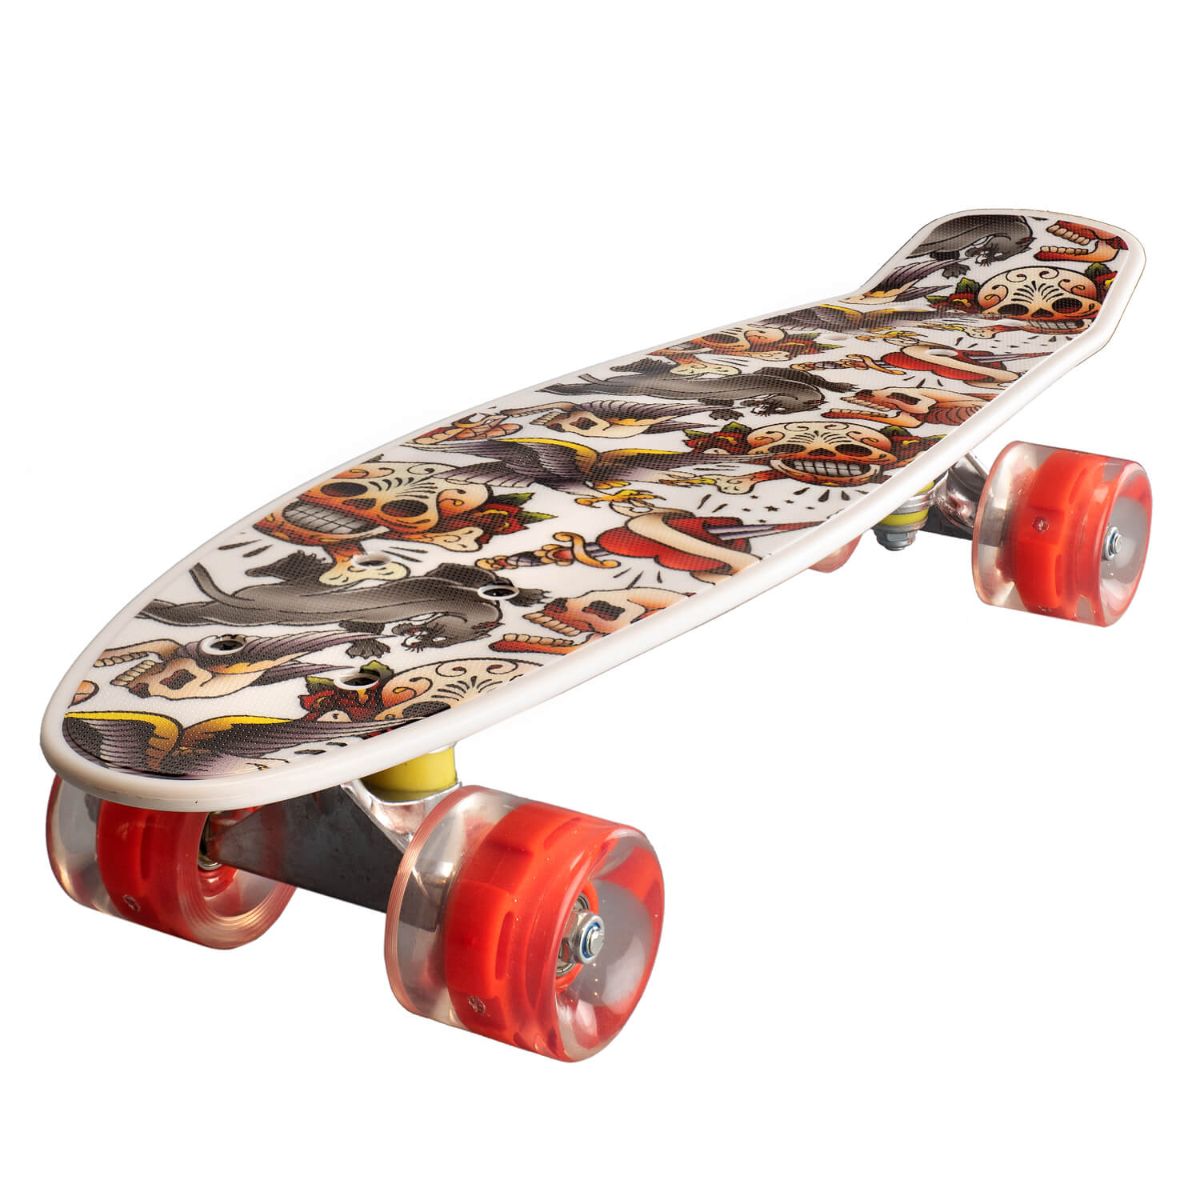 Penny board Landsurfer, Cu roti luminoase, 56 cm, ABEC-7 PU, Aluminium 90 kg, Happy skull Role si skateboard imagine 2022